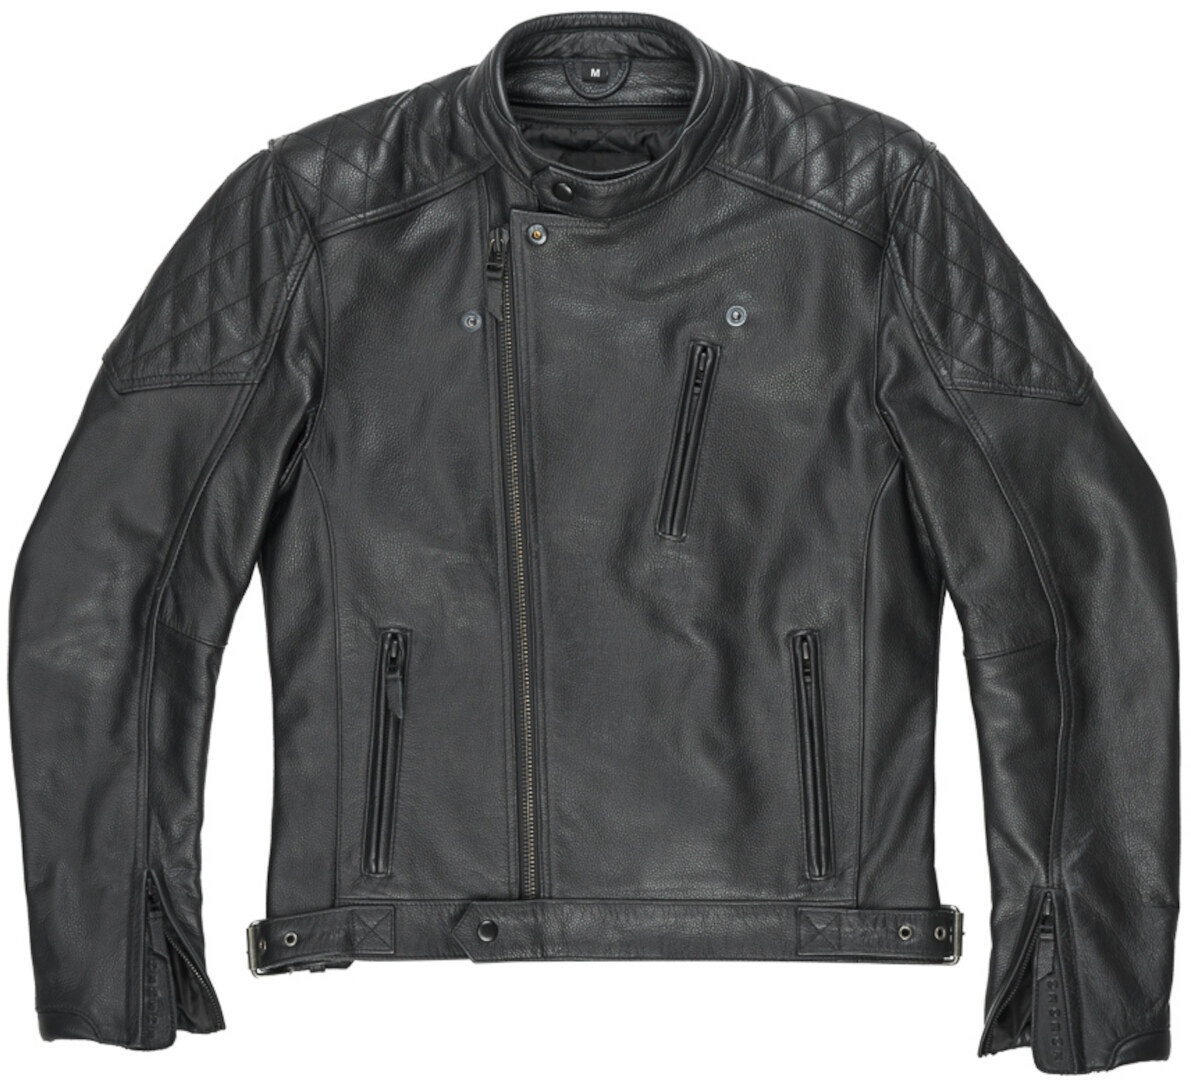 Pando Moto Twin Motorfiets lederen jas, zwart, XL